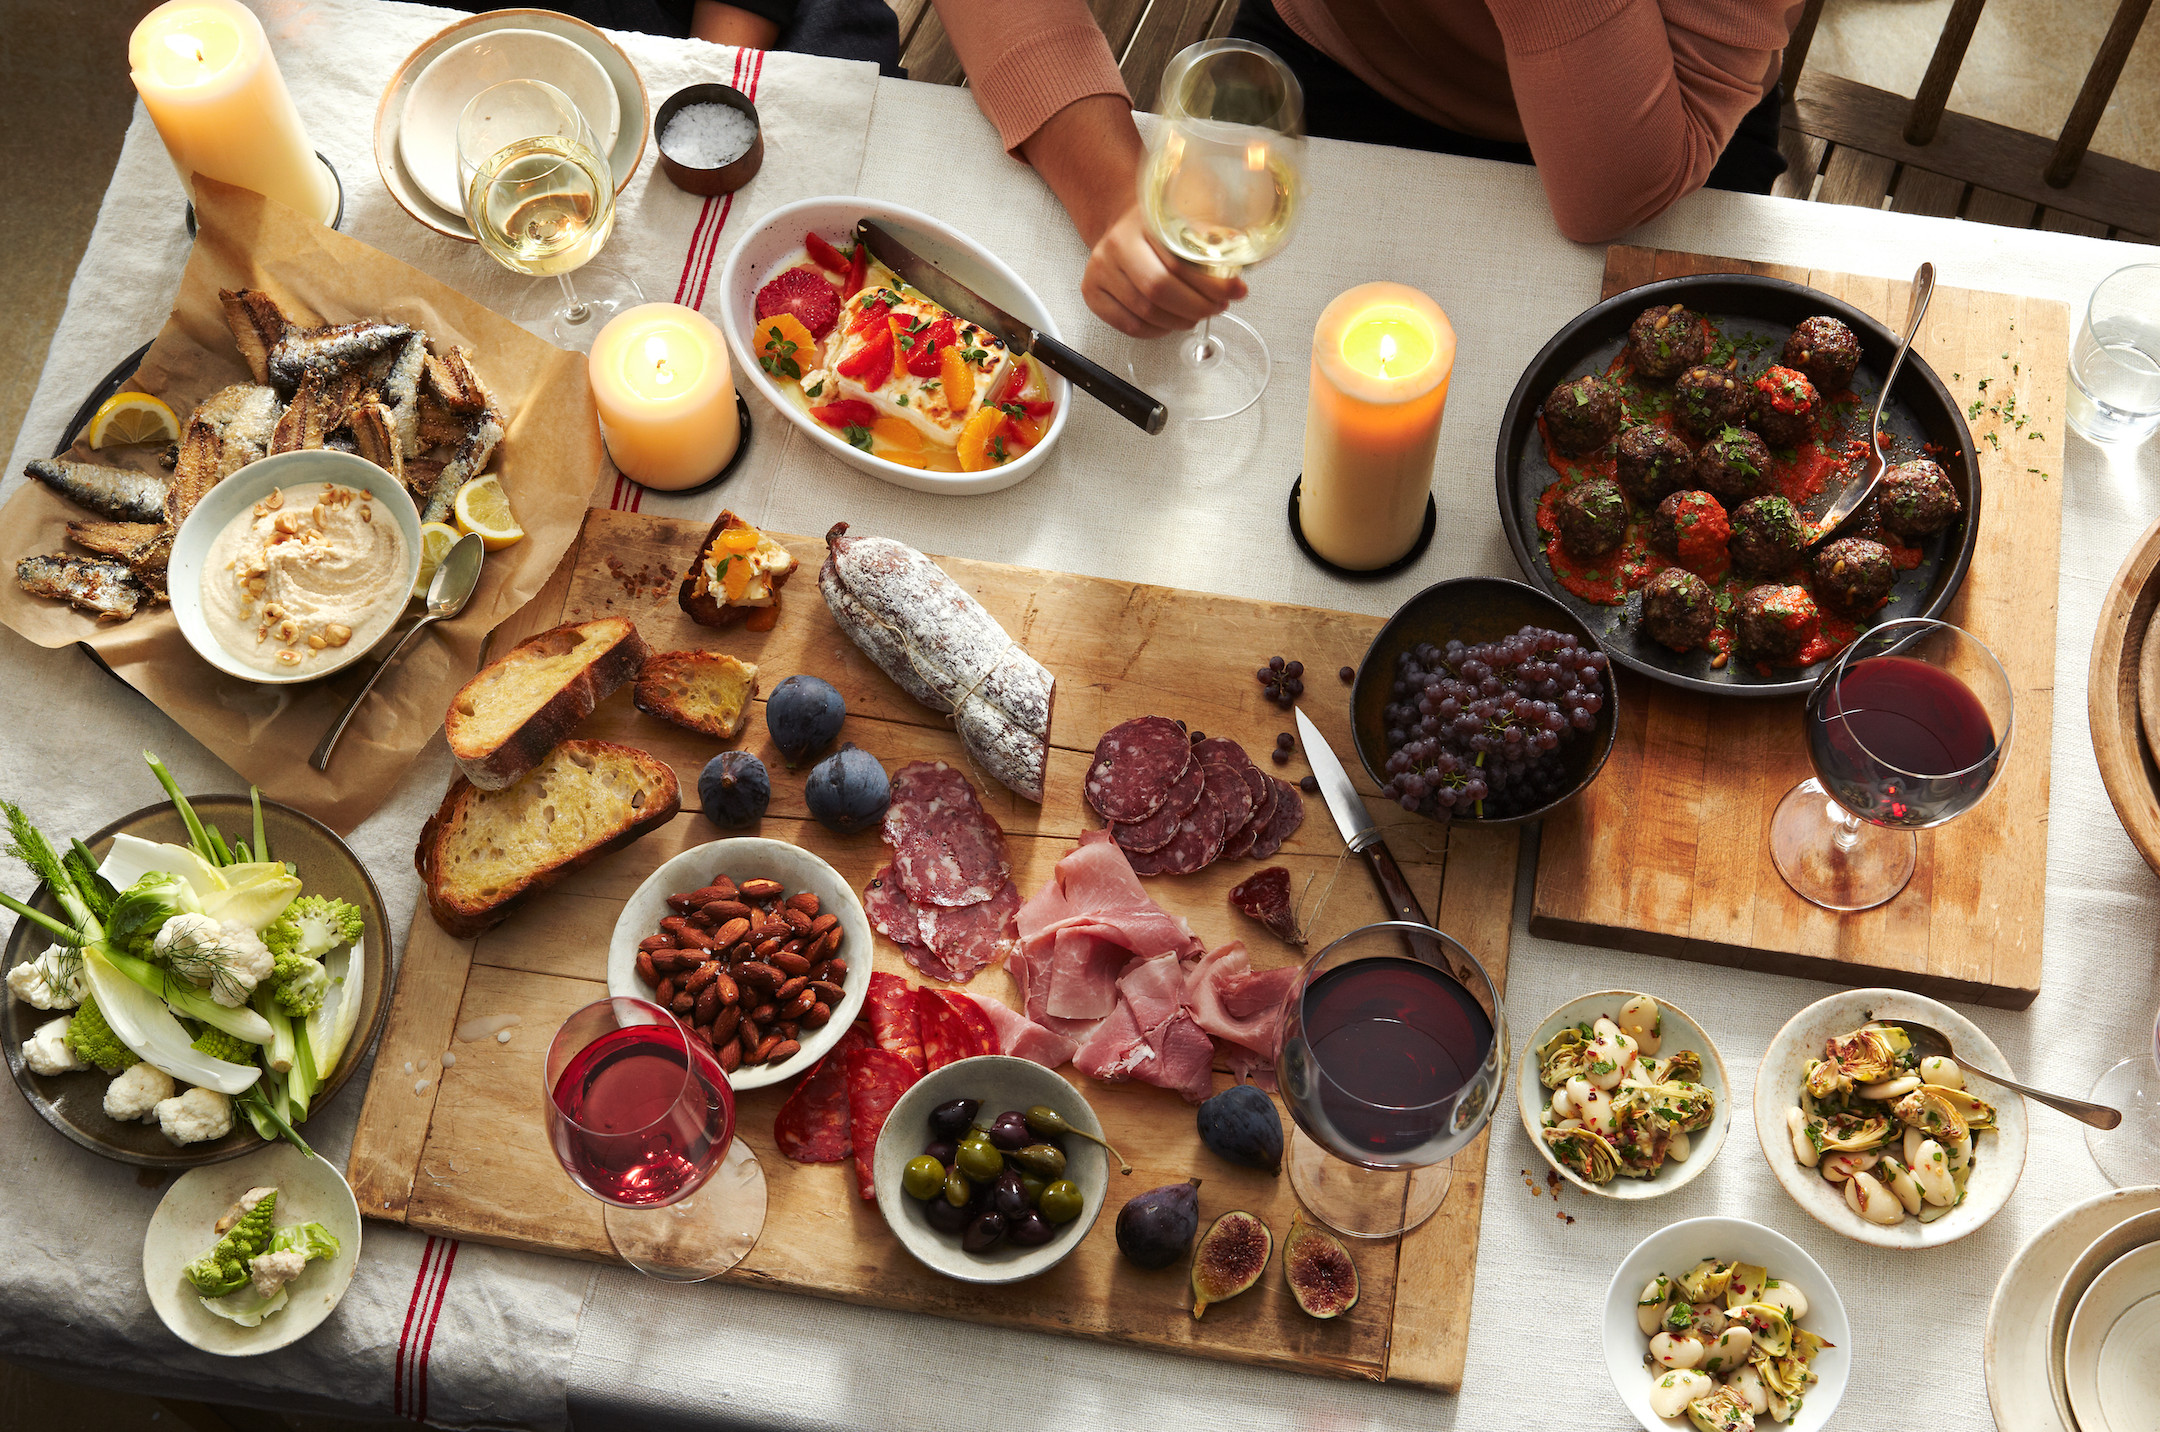 Italian Menu Ideas For Dinner Party
 How to Host an Instagram Worthy Italian Dinner Party